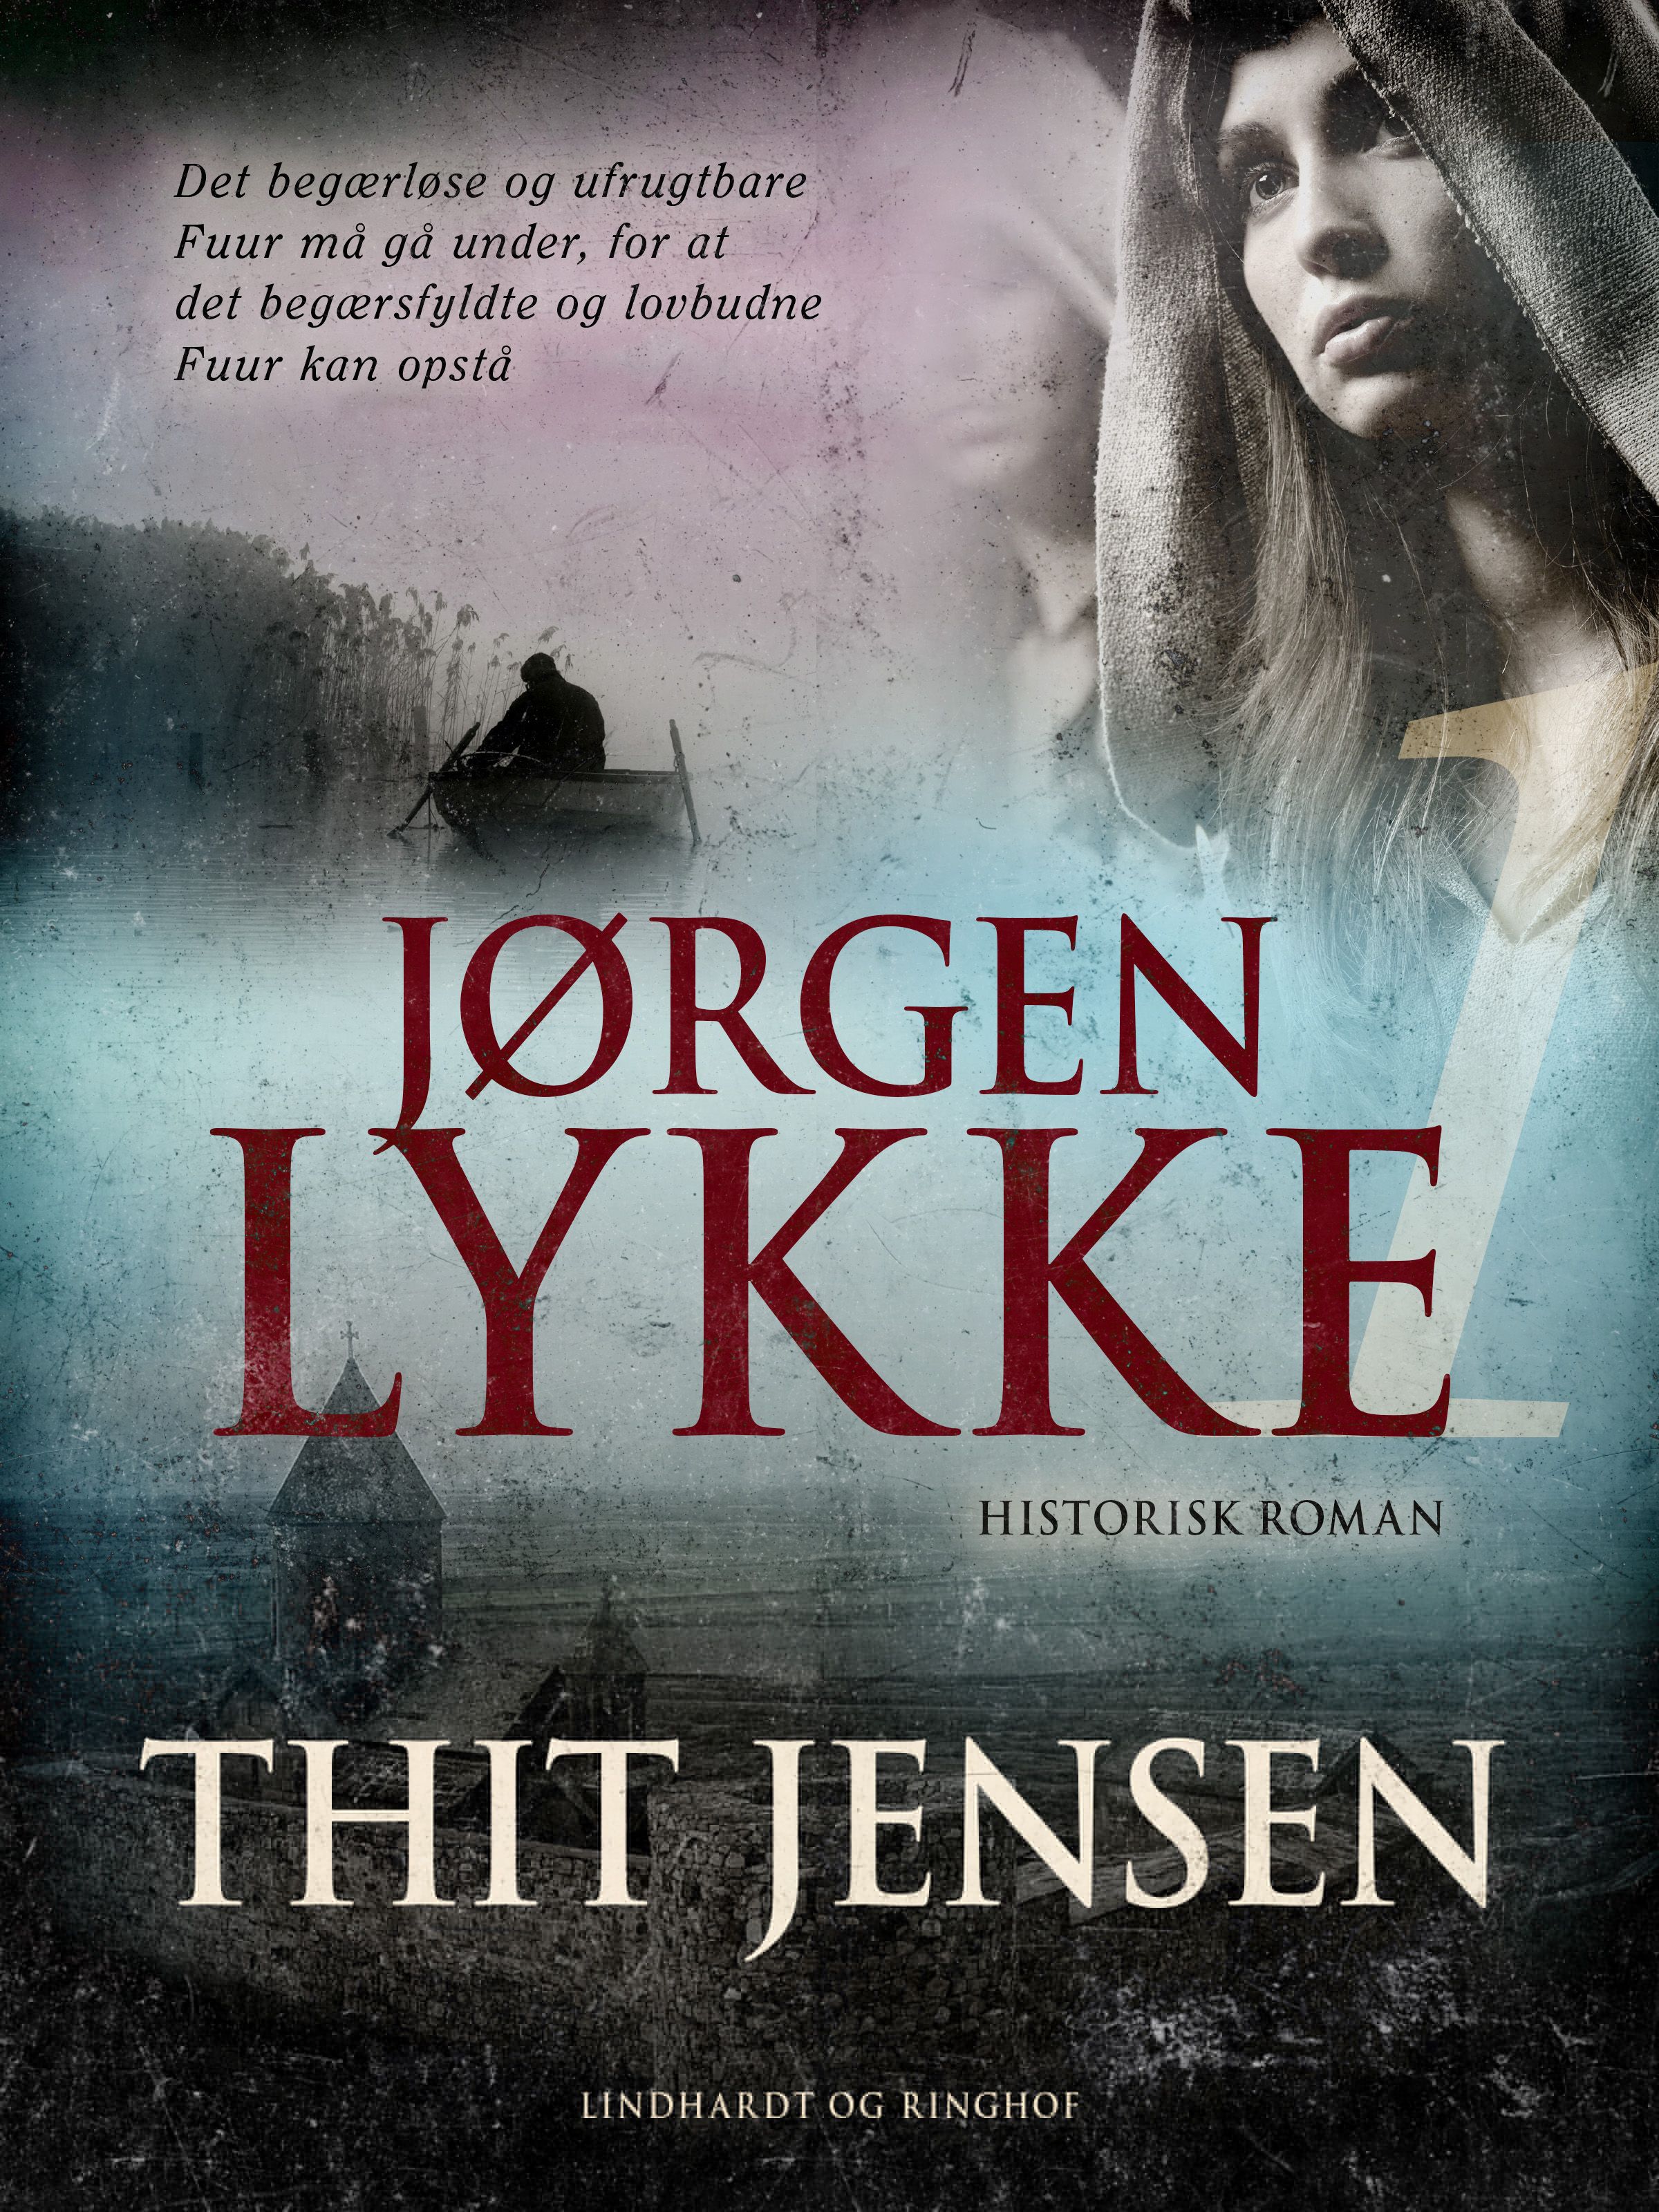 Jørgen Lykke: bind 1, ljudbok av Thit Jensen